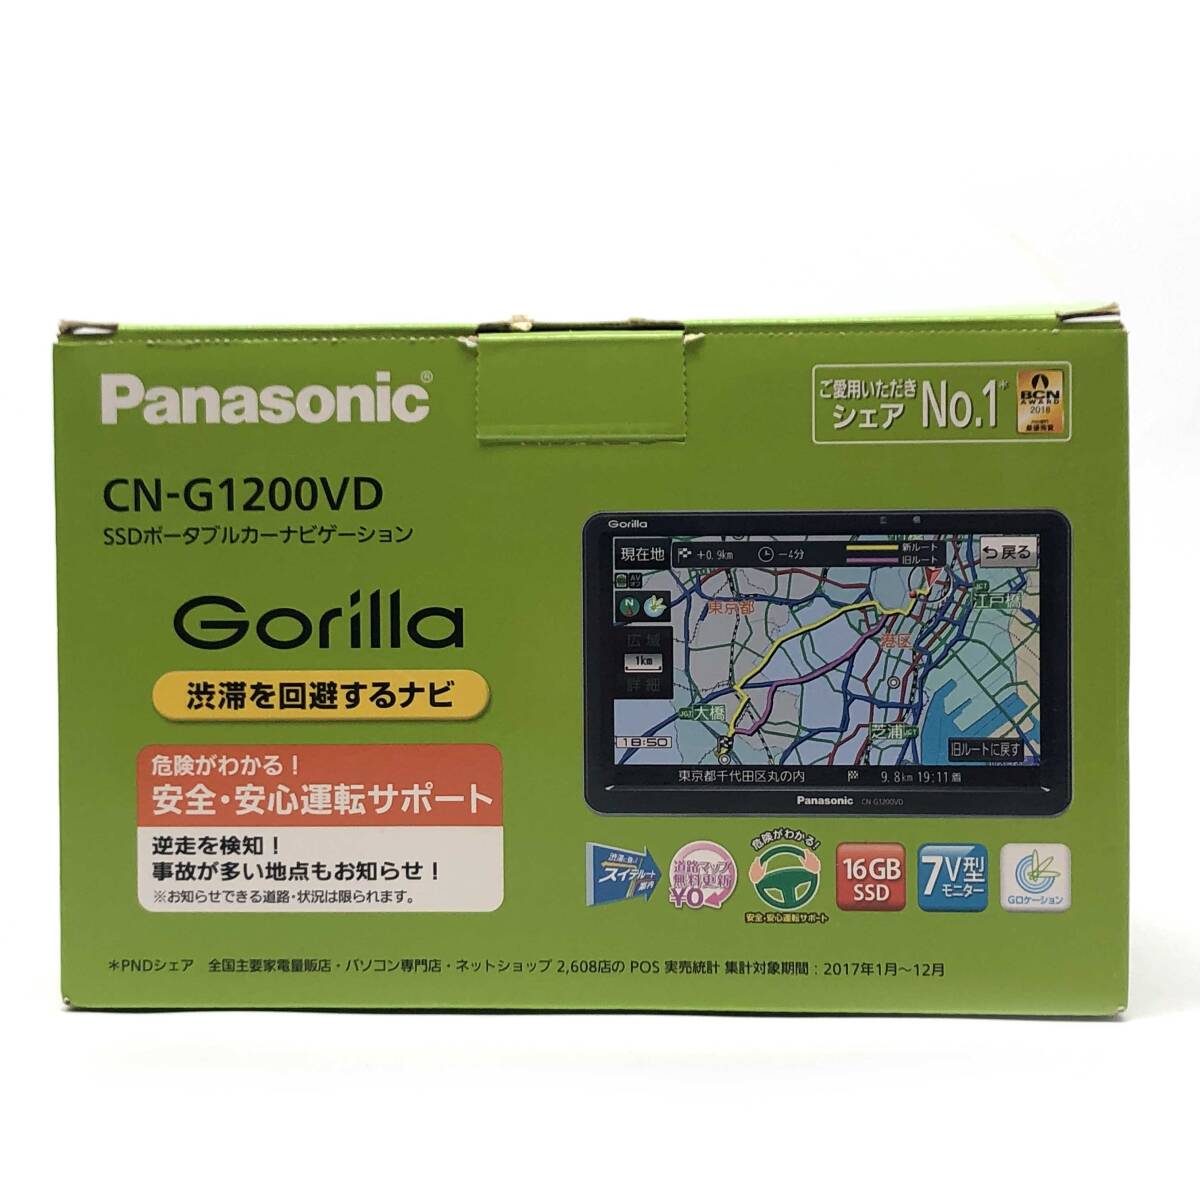 tu106 Panasonic パナソニック SSDポータブルナビゲーション Gorilla CN-G1200VD ※未検品ジャンクの画像1